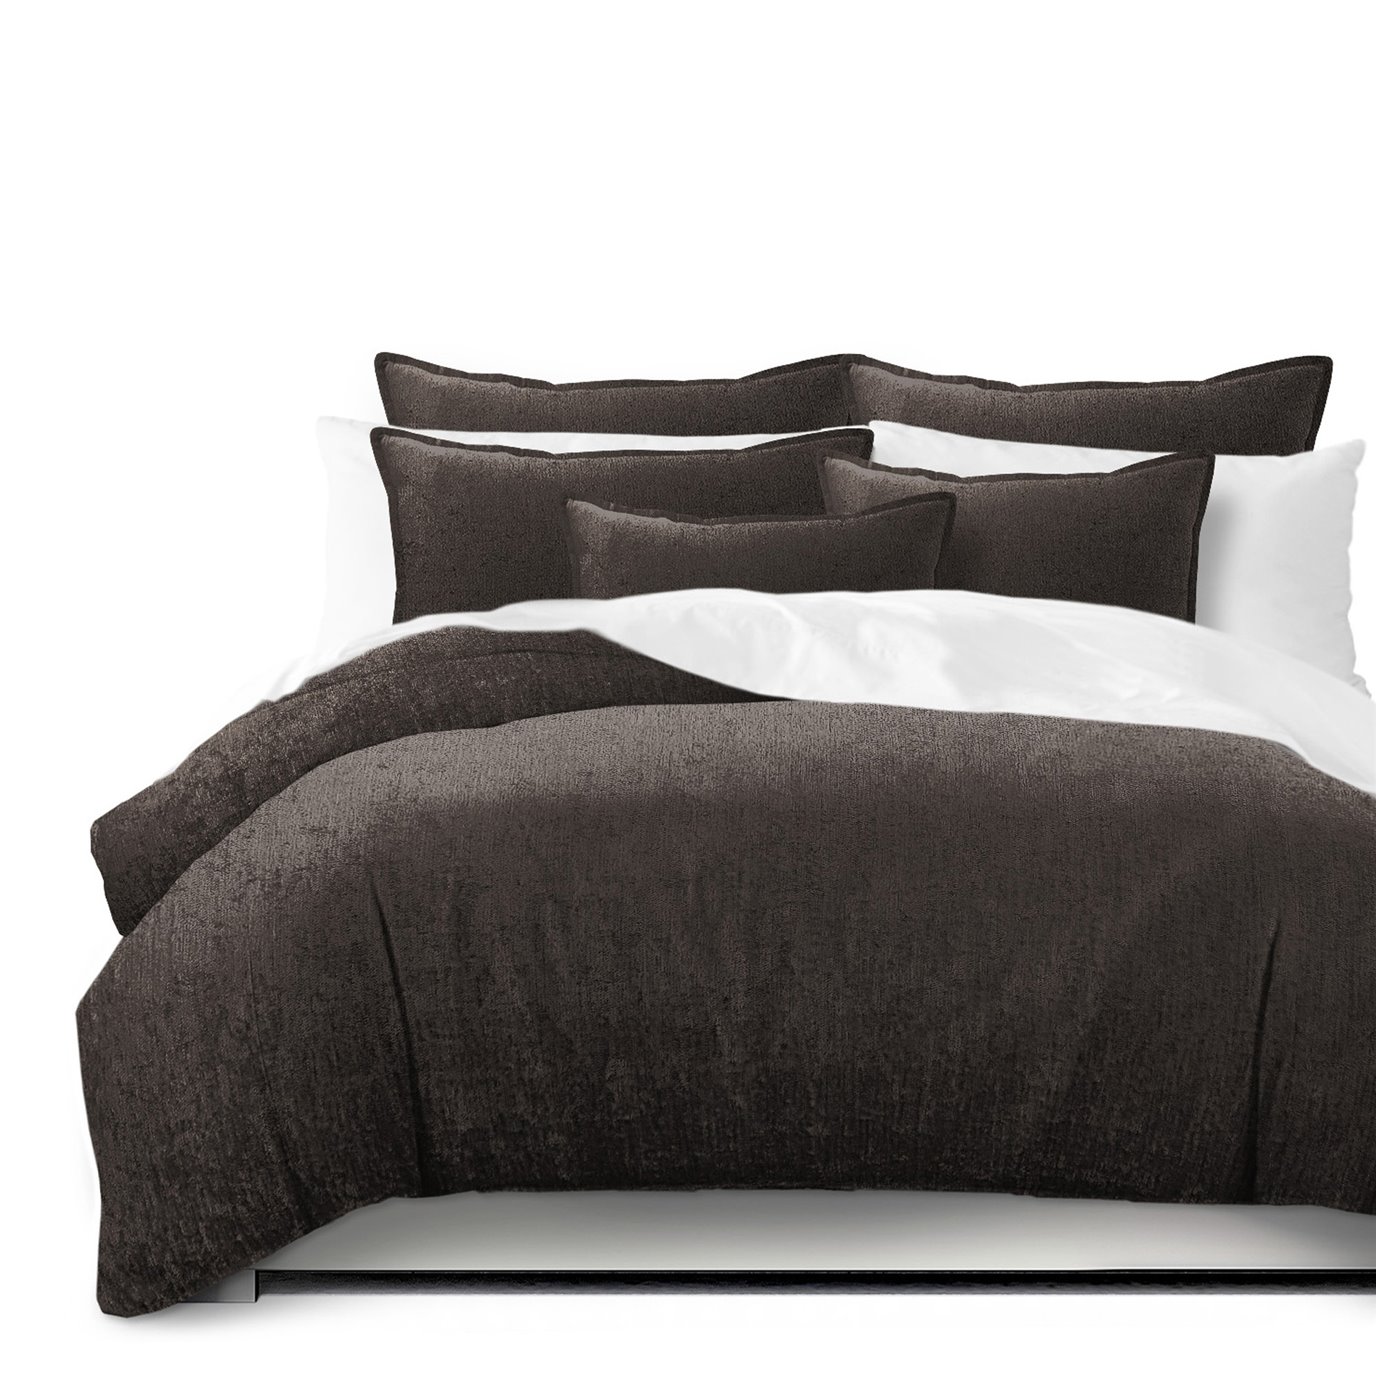 Juno Velvet Chocolate Comforter and Pillow Sham(s) Set - Size Super Queen